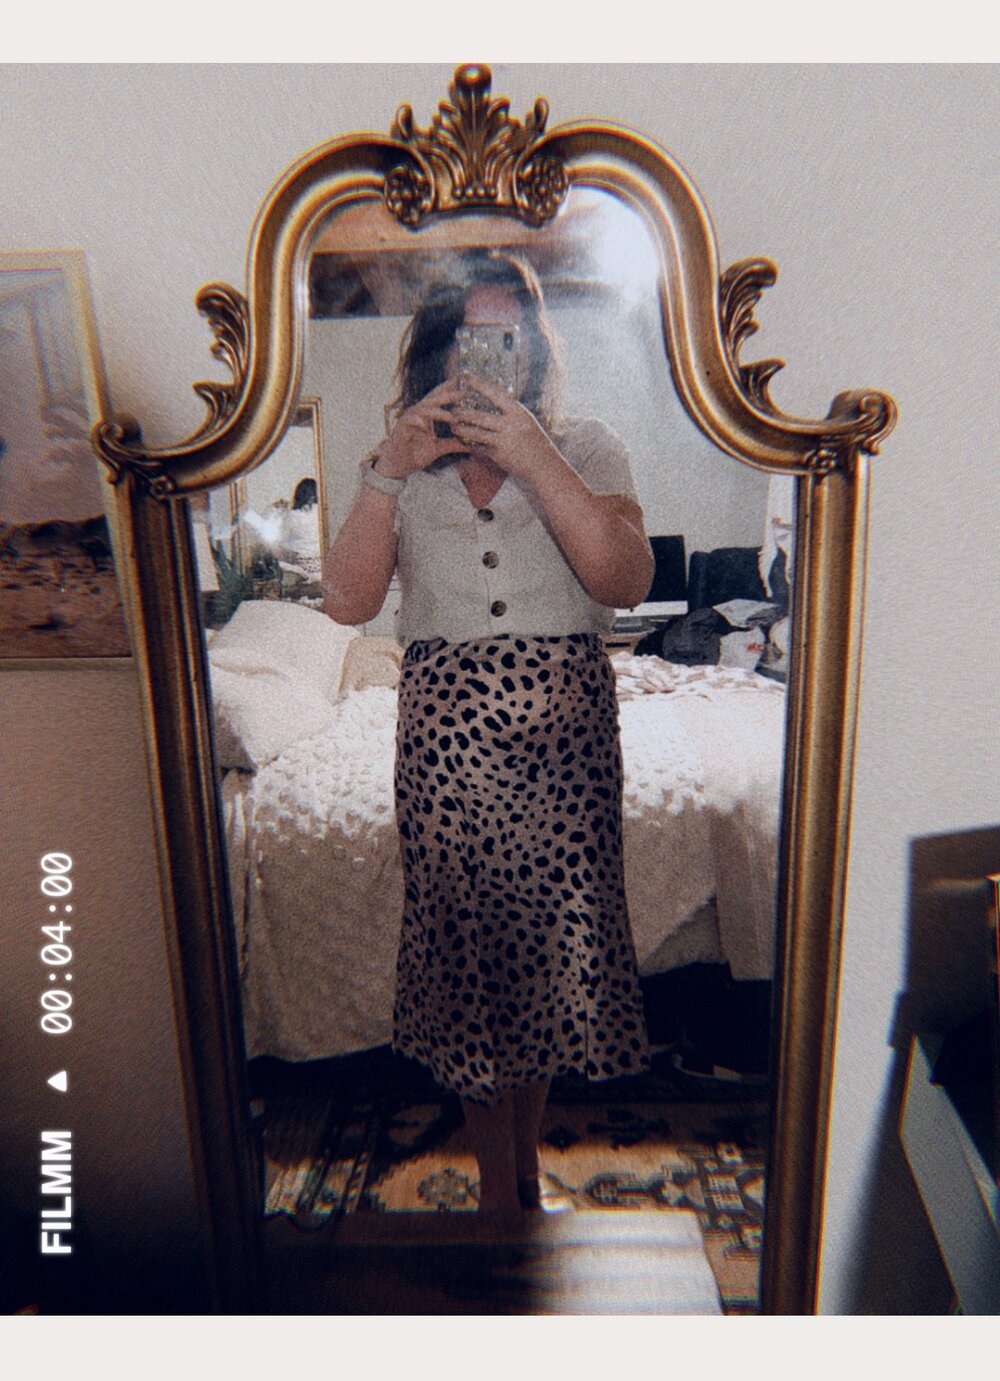 That Leopard Skirt